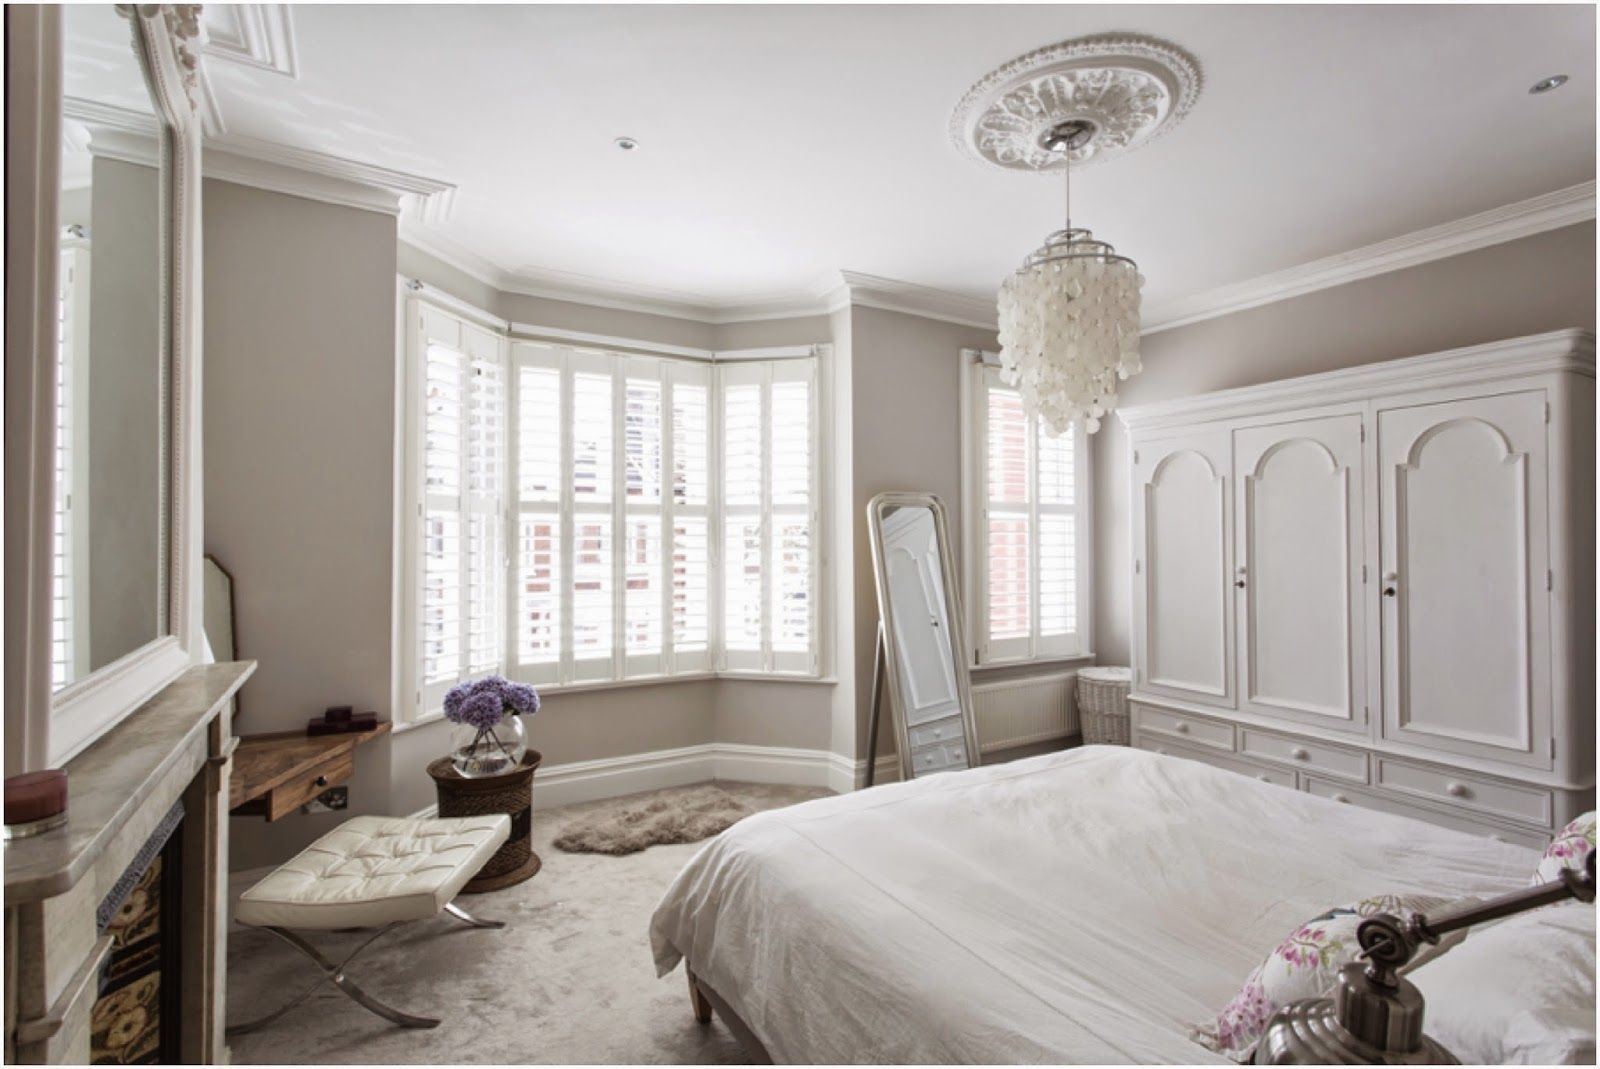 london wallpaper for bedrooms,bedroom,room,furniture,bed,white